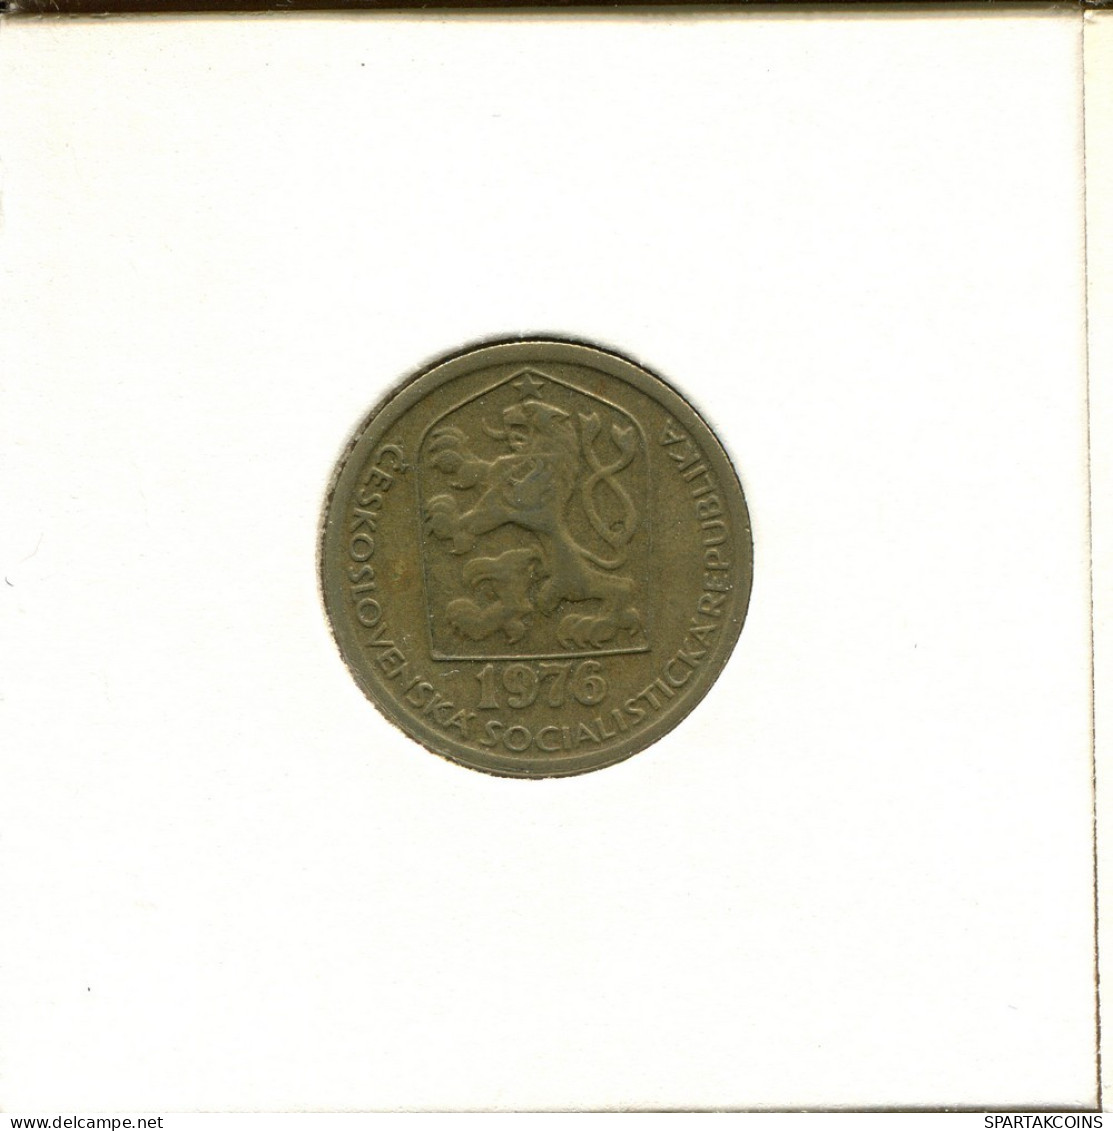 20 HALERU 1976 CZECHOSLOVAKIA Coin #AS945.U.A - Czechoslovakia